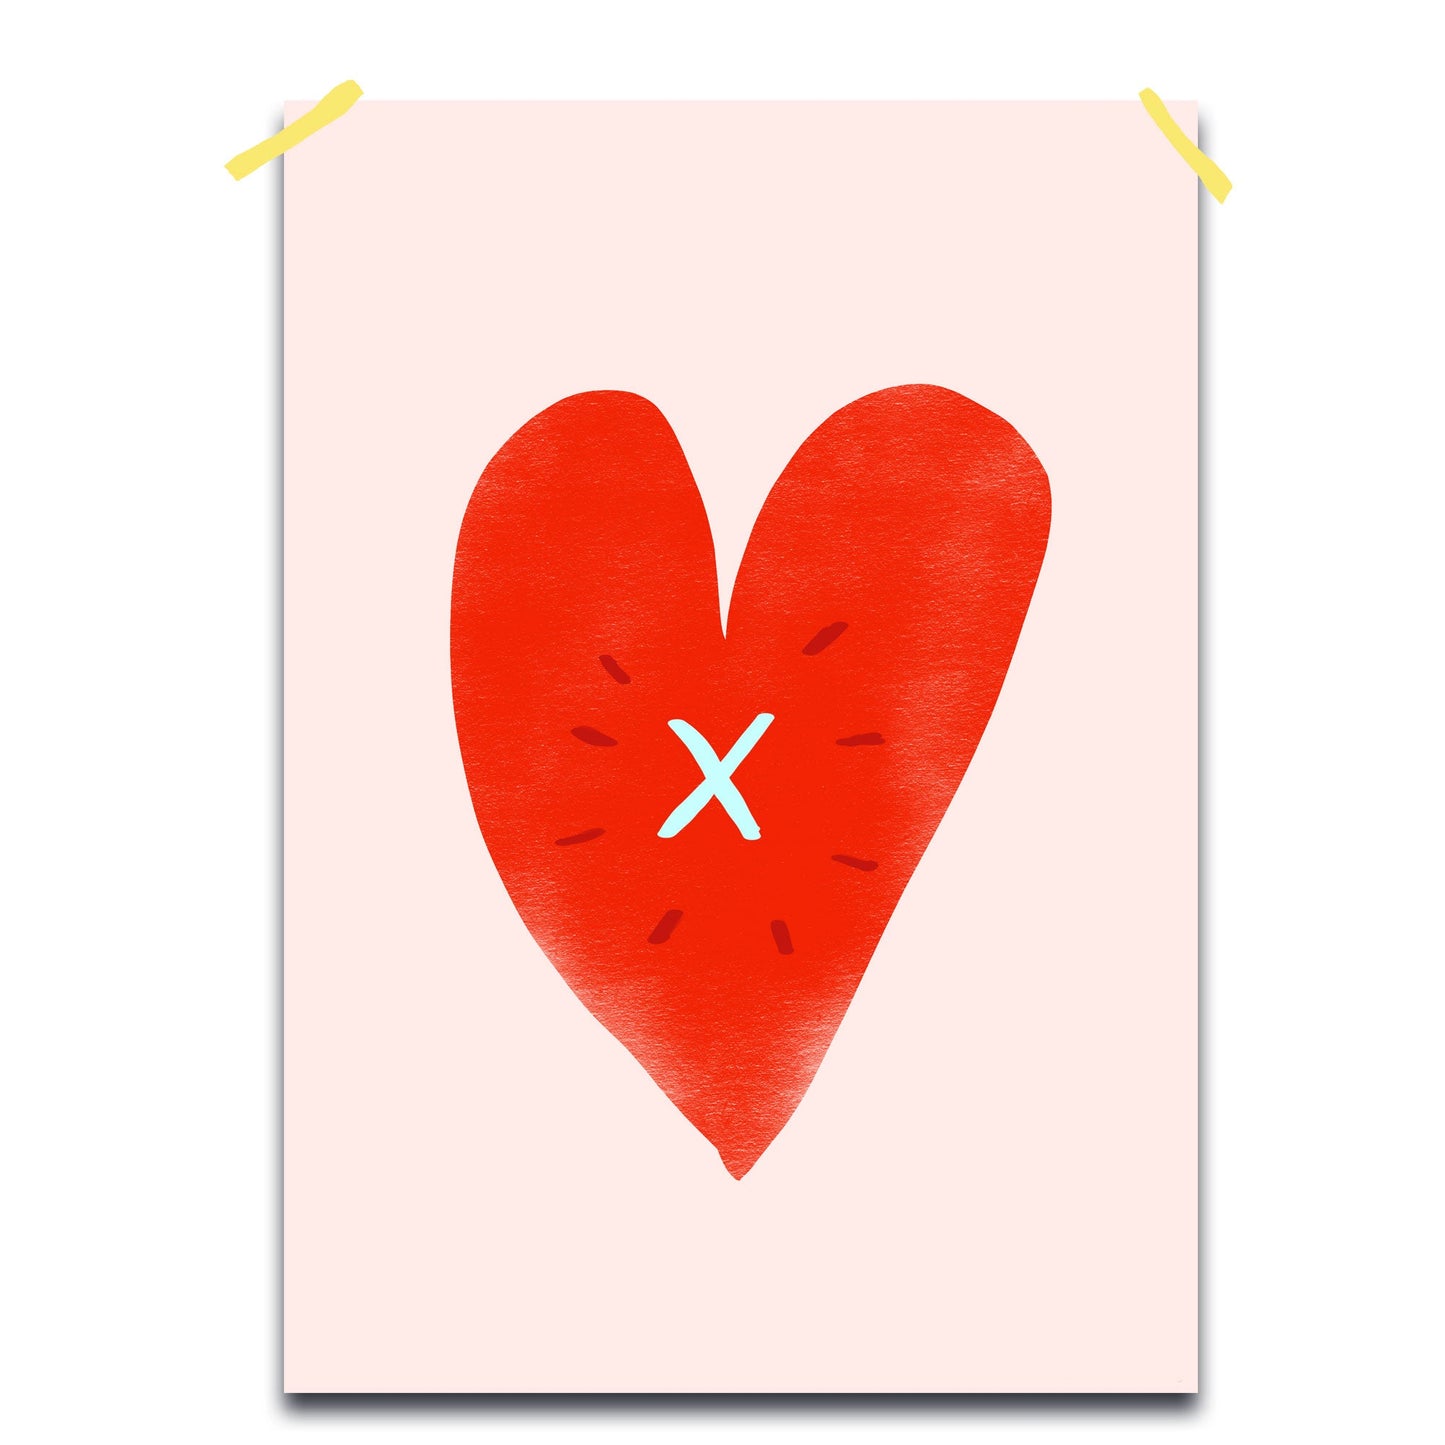 x in heart a4 print